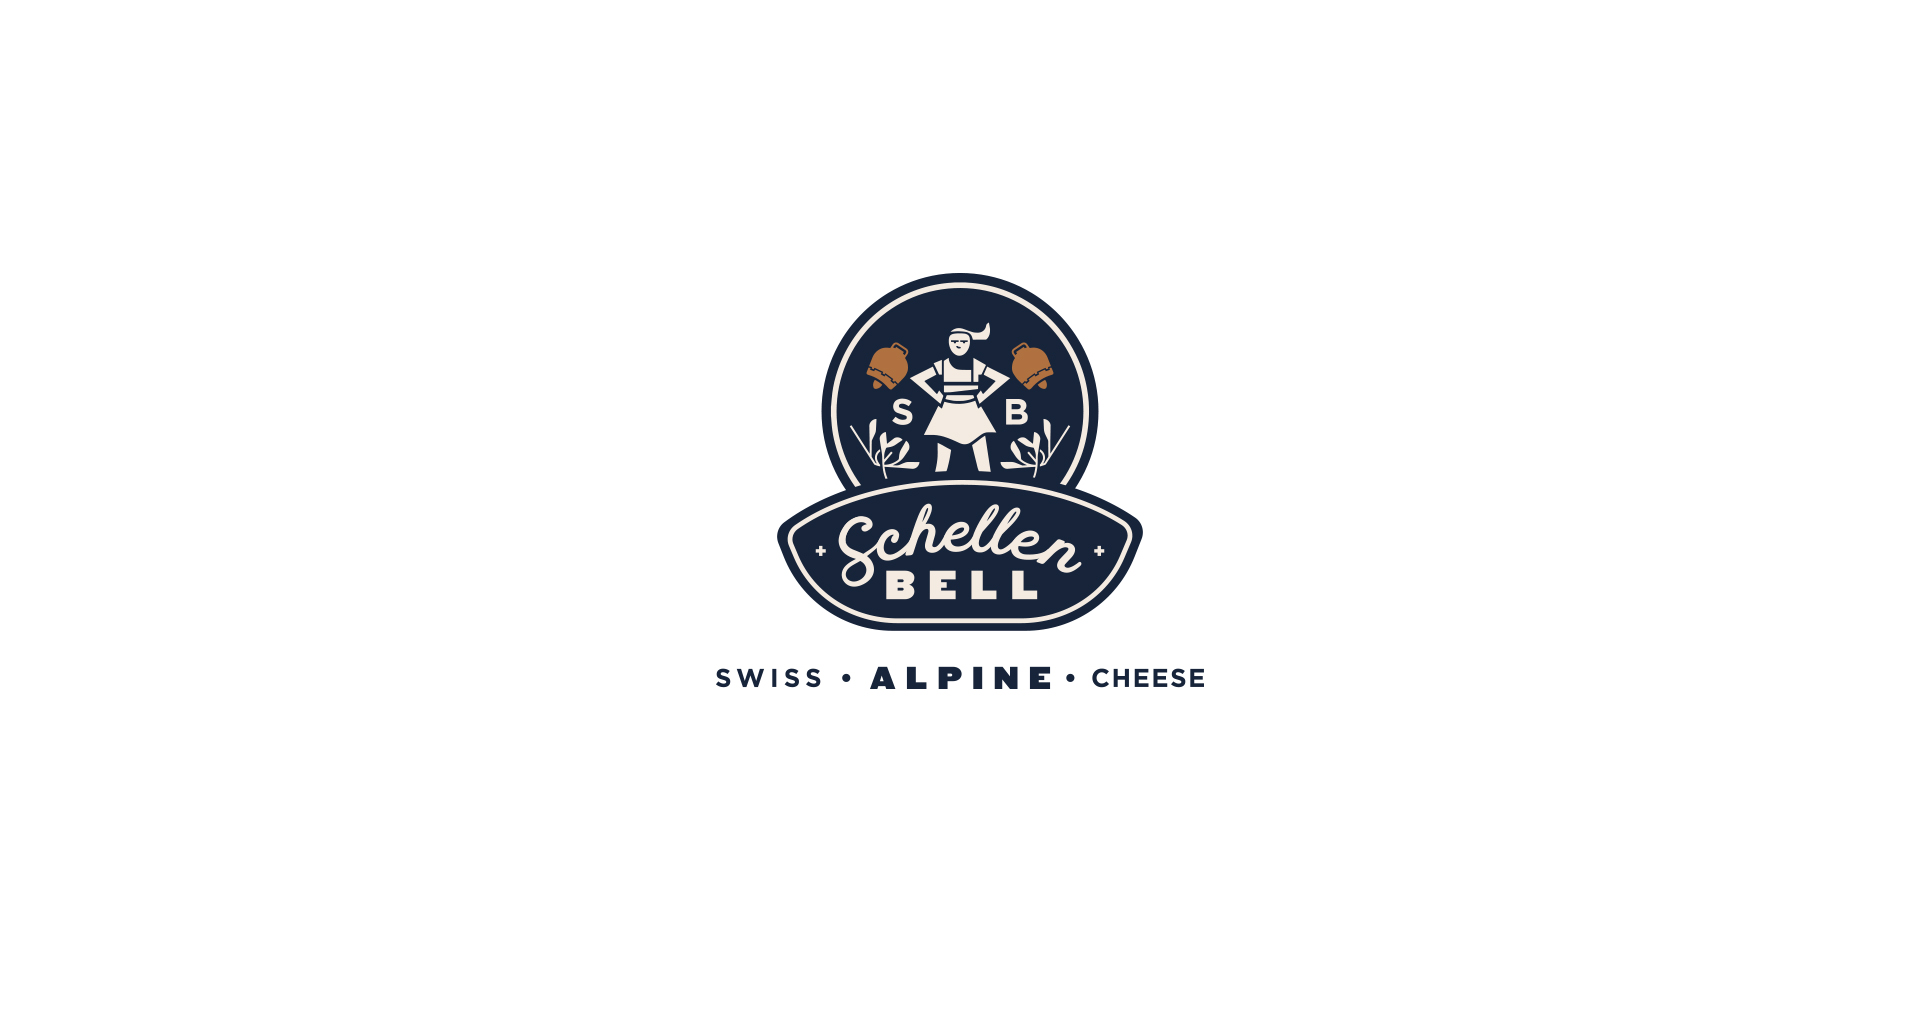 swiss-cheese-product-design-packaging-zeki-michael-international-freelance-wine-gourmet-wine-design-branding-packaging-logo-identity